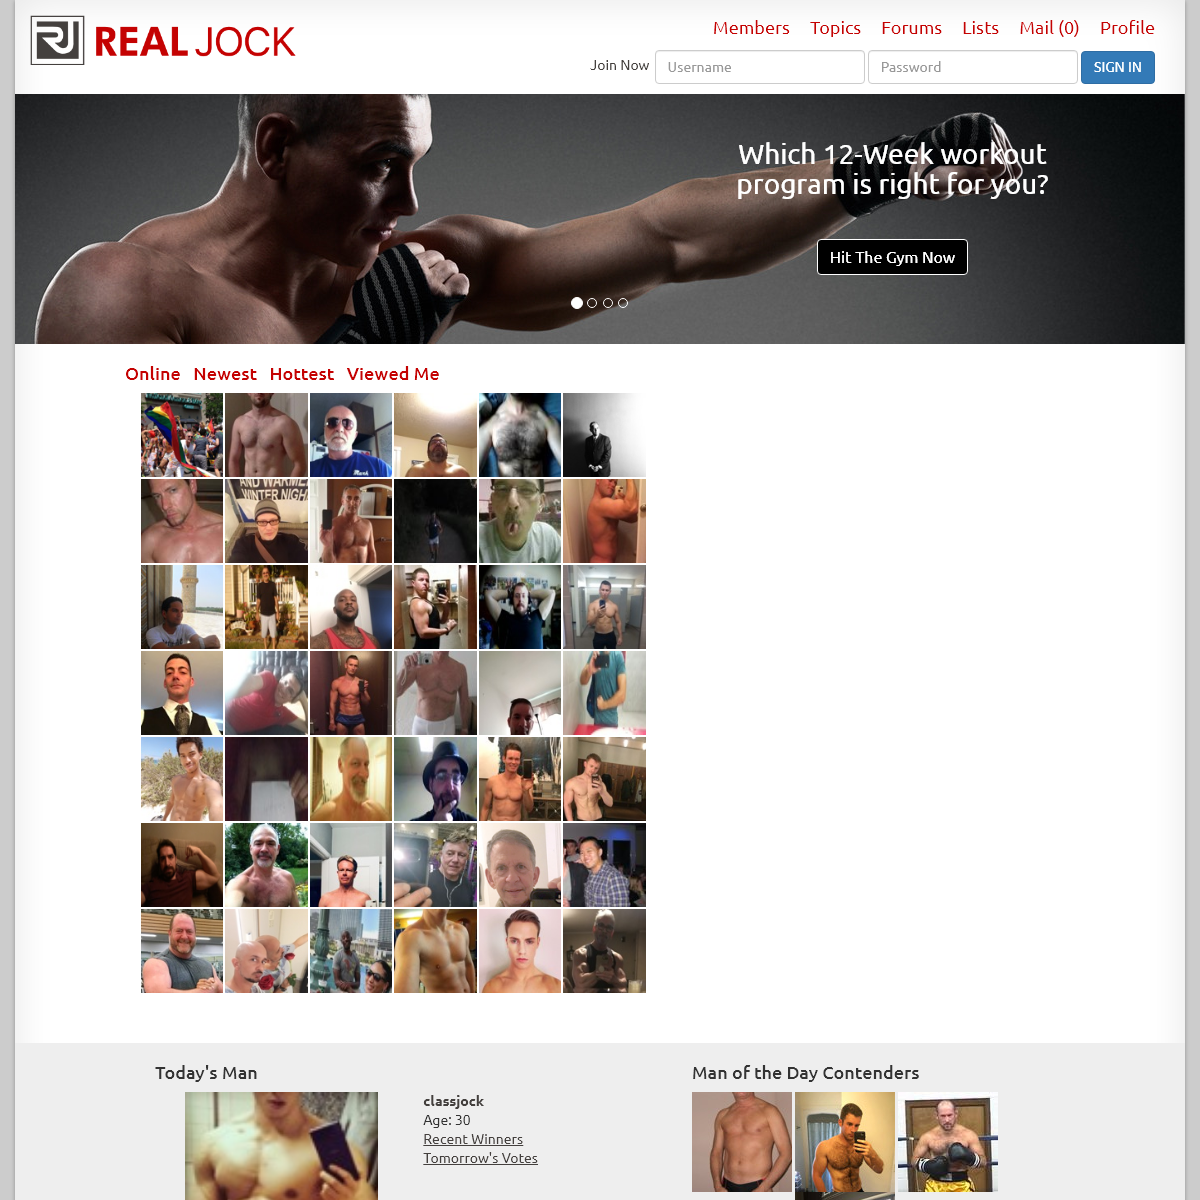 A complete backup of realjock.com